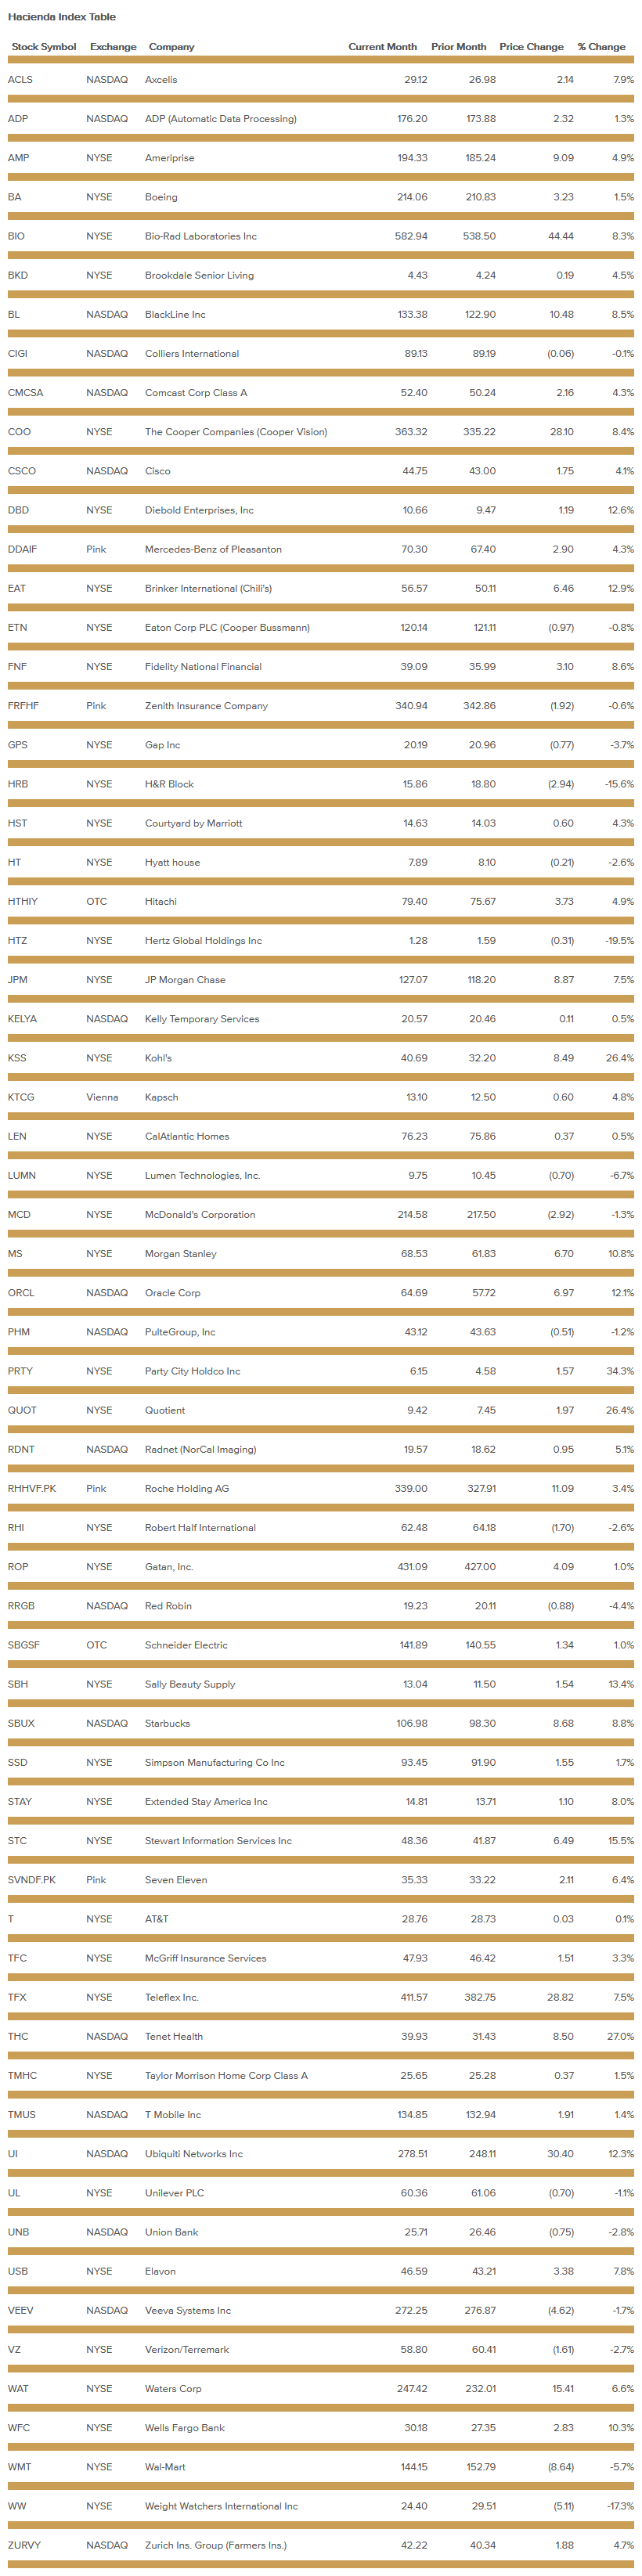 hacienda-index-table-january-2021.png